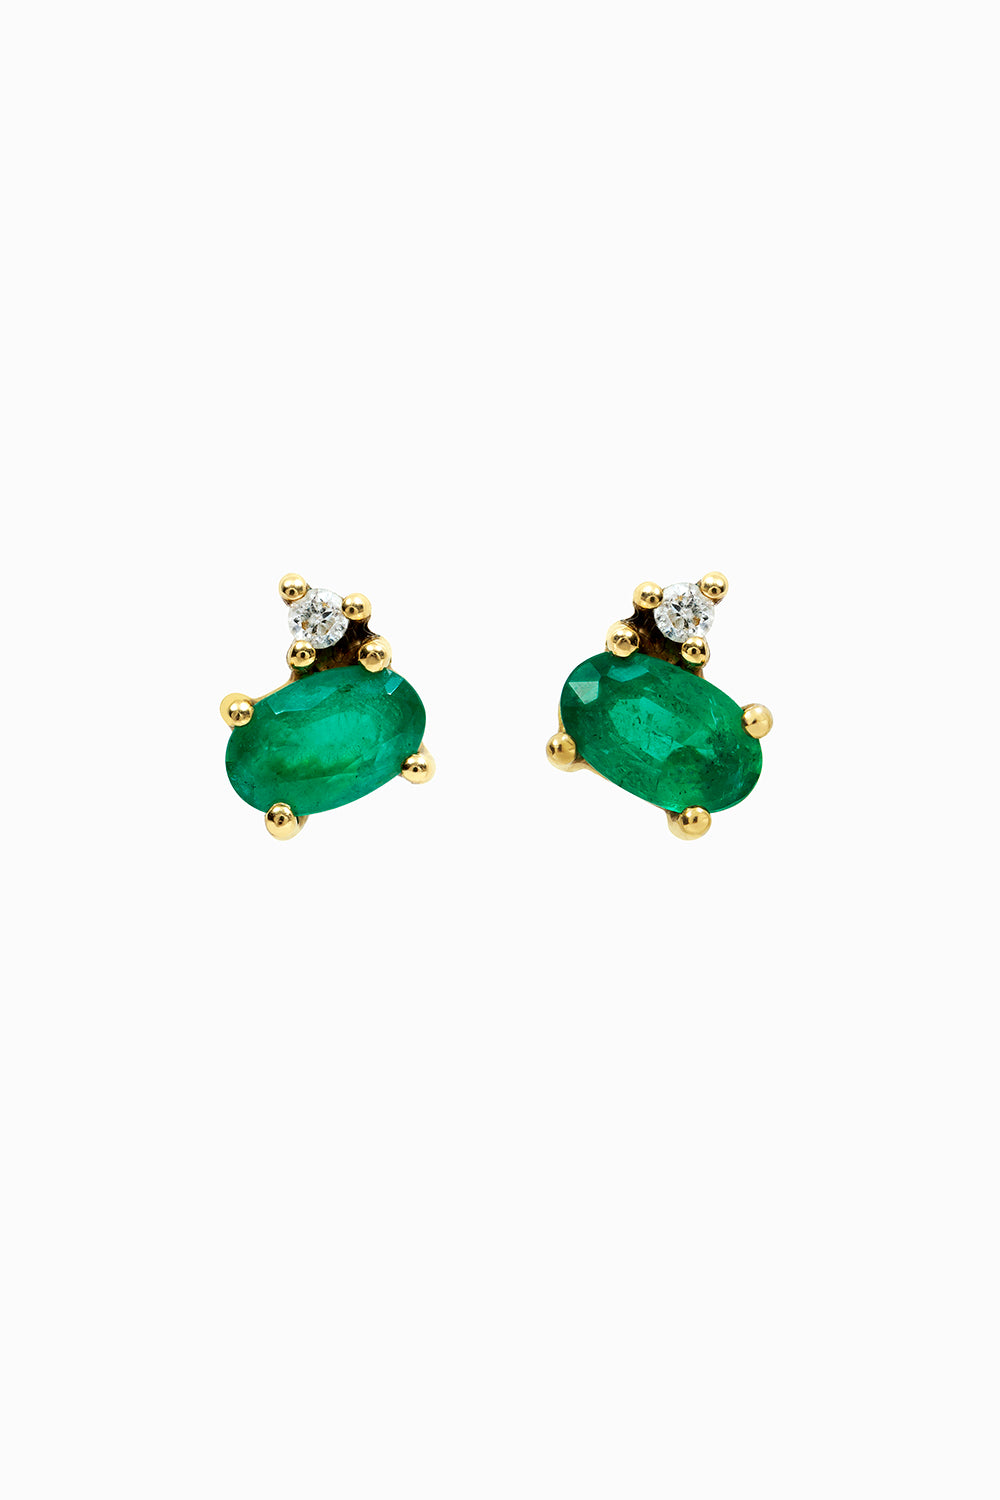 Oval emerald and diamond stud earrings